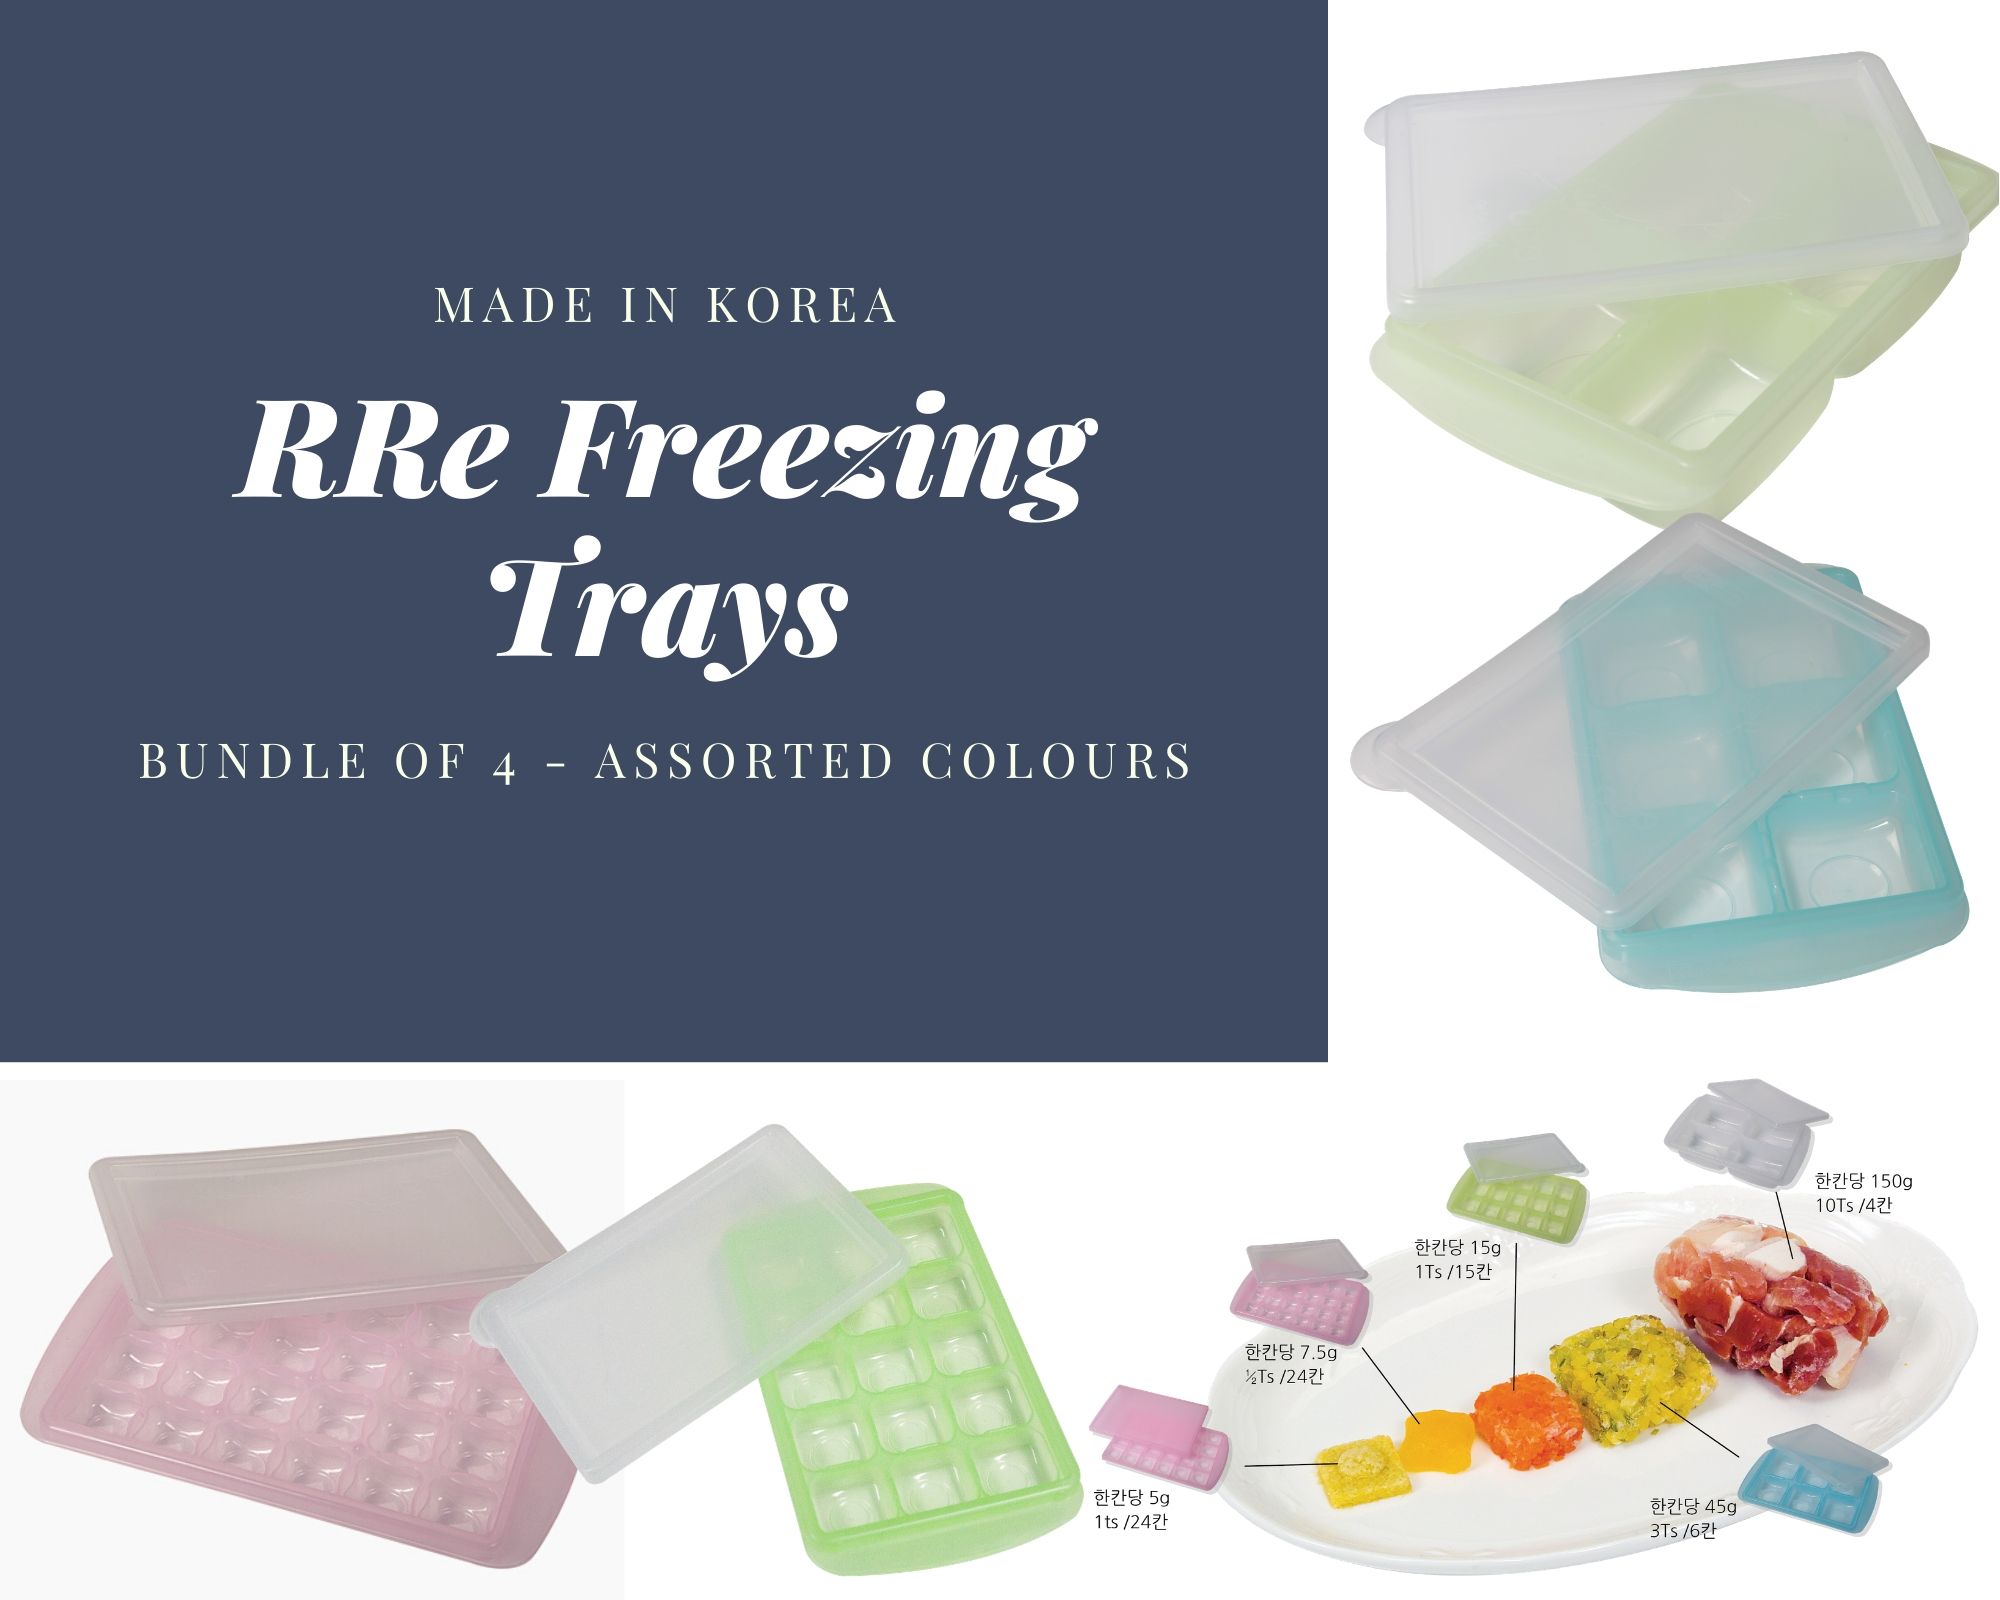 baby-fair RRE Freezing Tray 4 Sizes (7.5g + 15g + 45g + 150g)